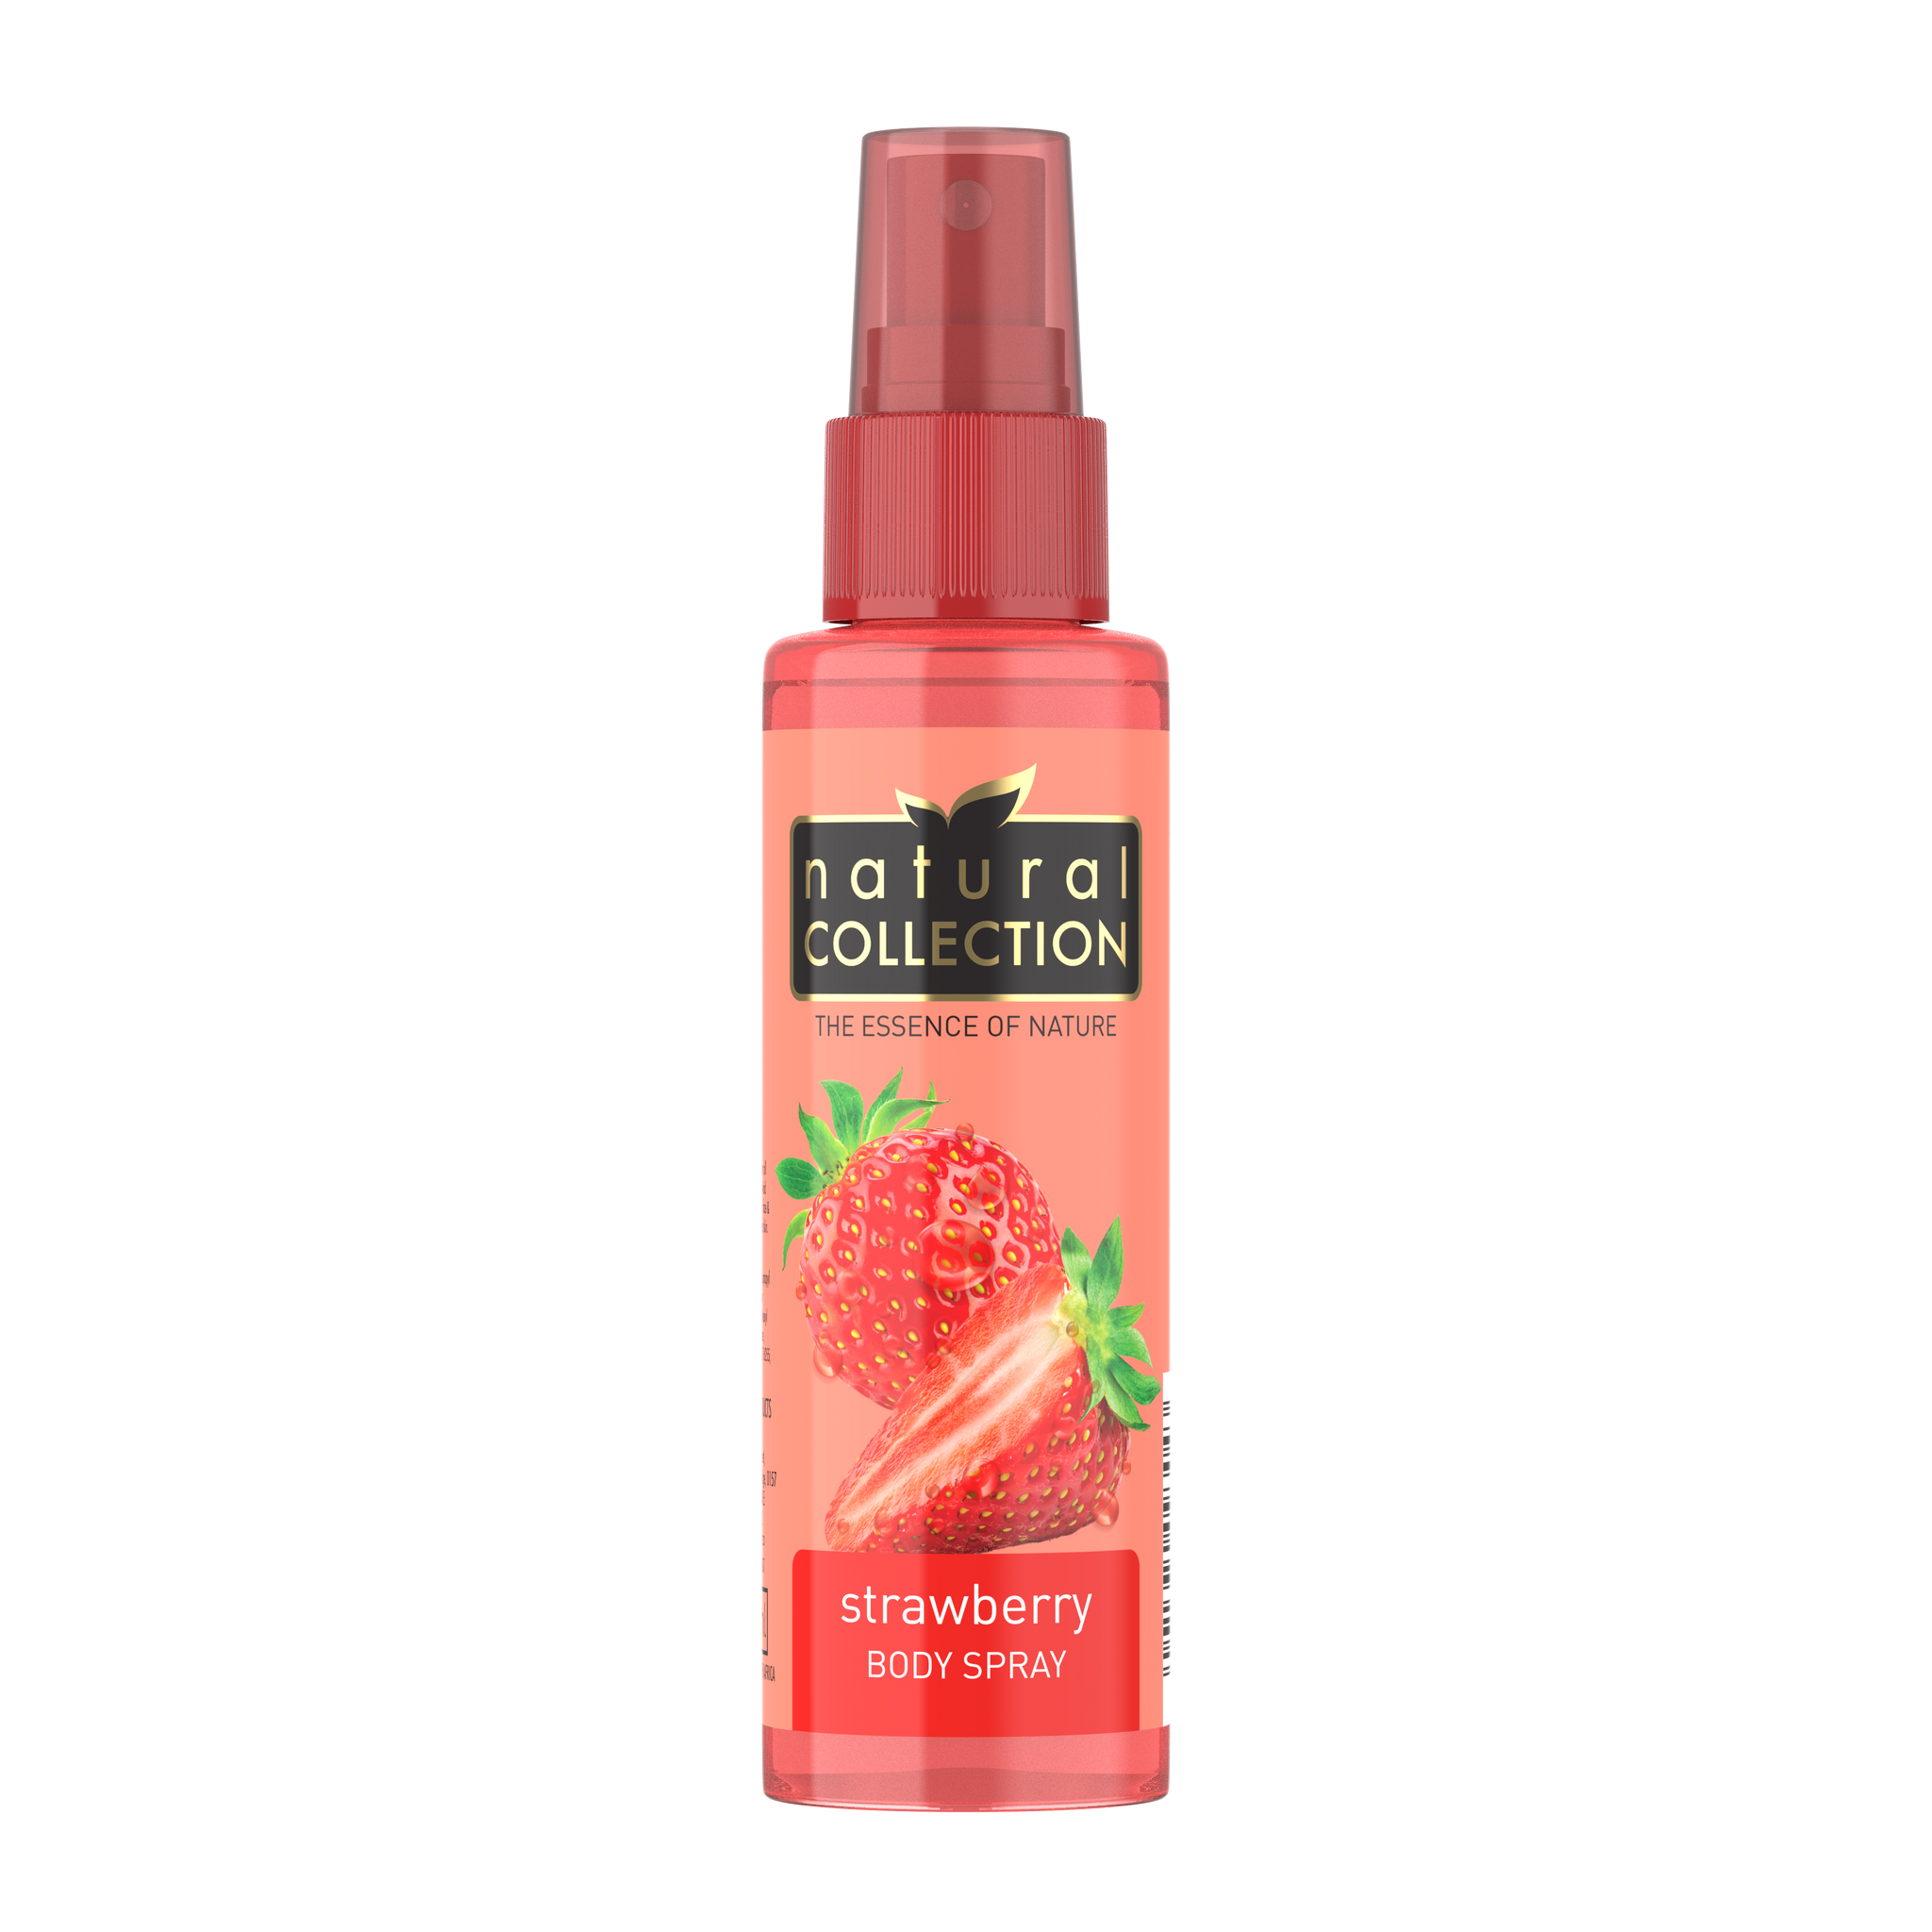 Arome Nature Body Spray Strawberry Delight